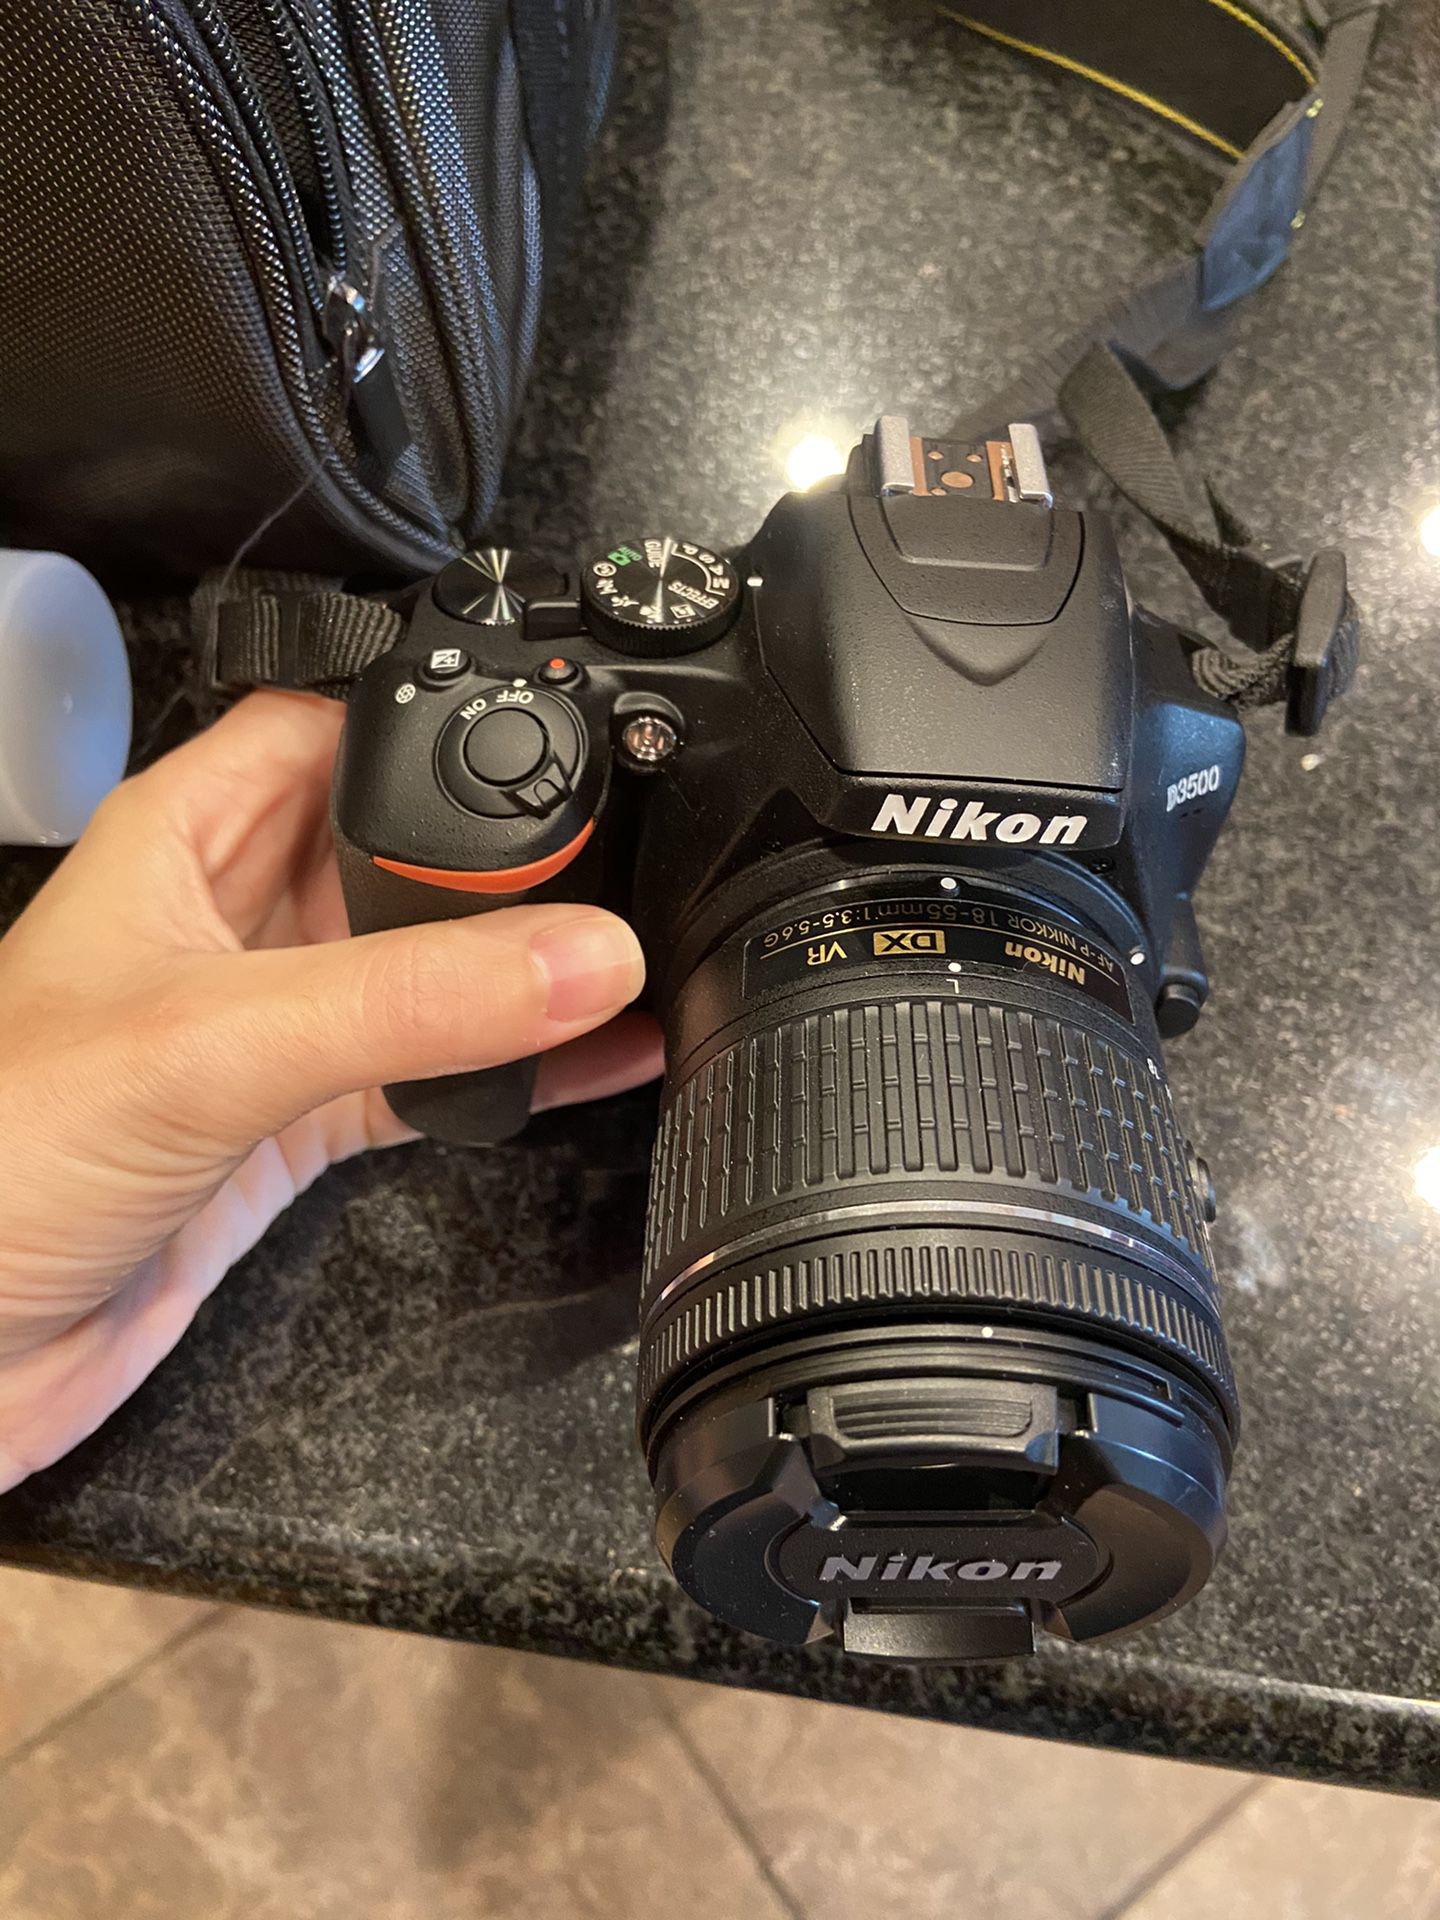 Nikon DSLR 3500 dual lens - $475 firm